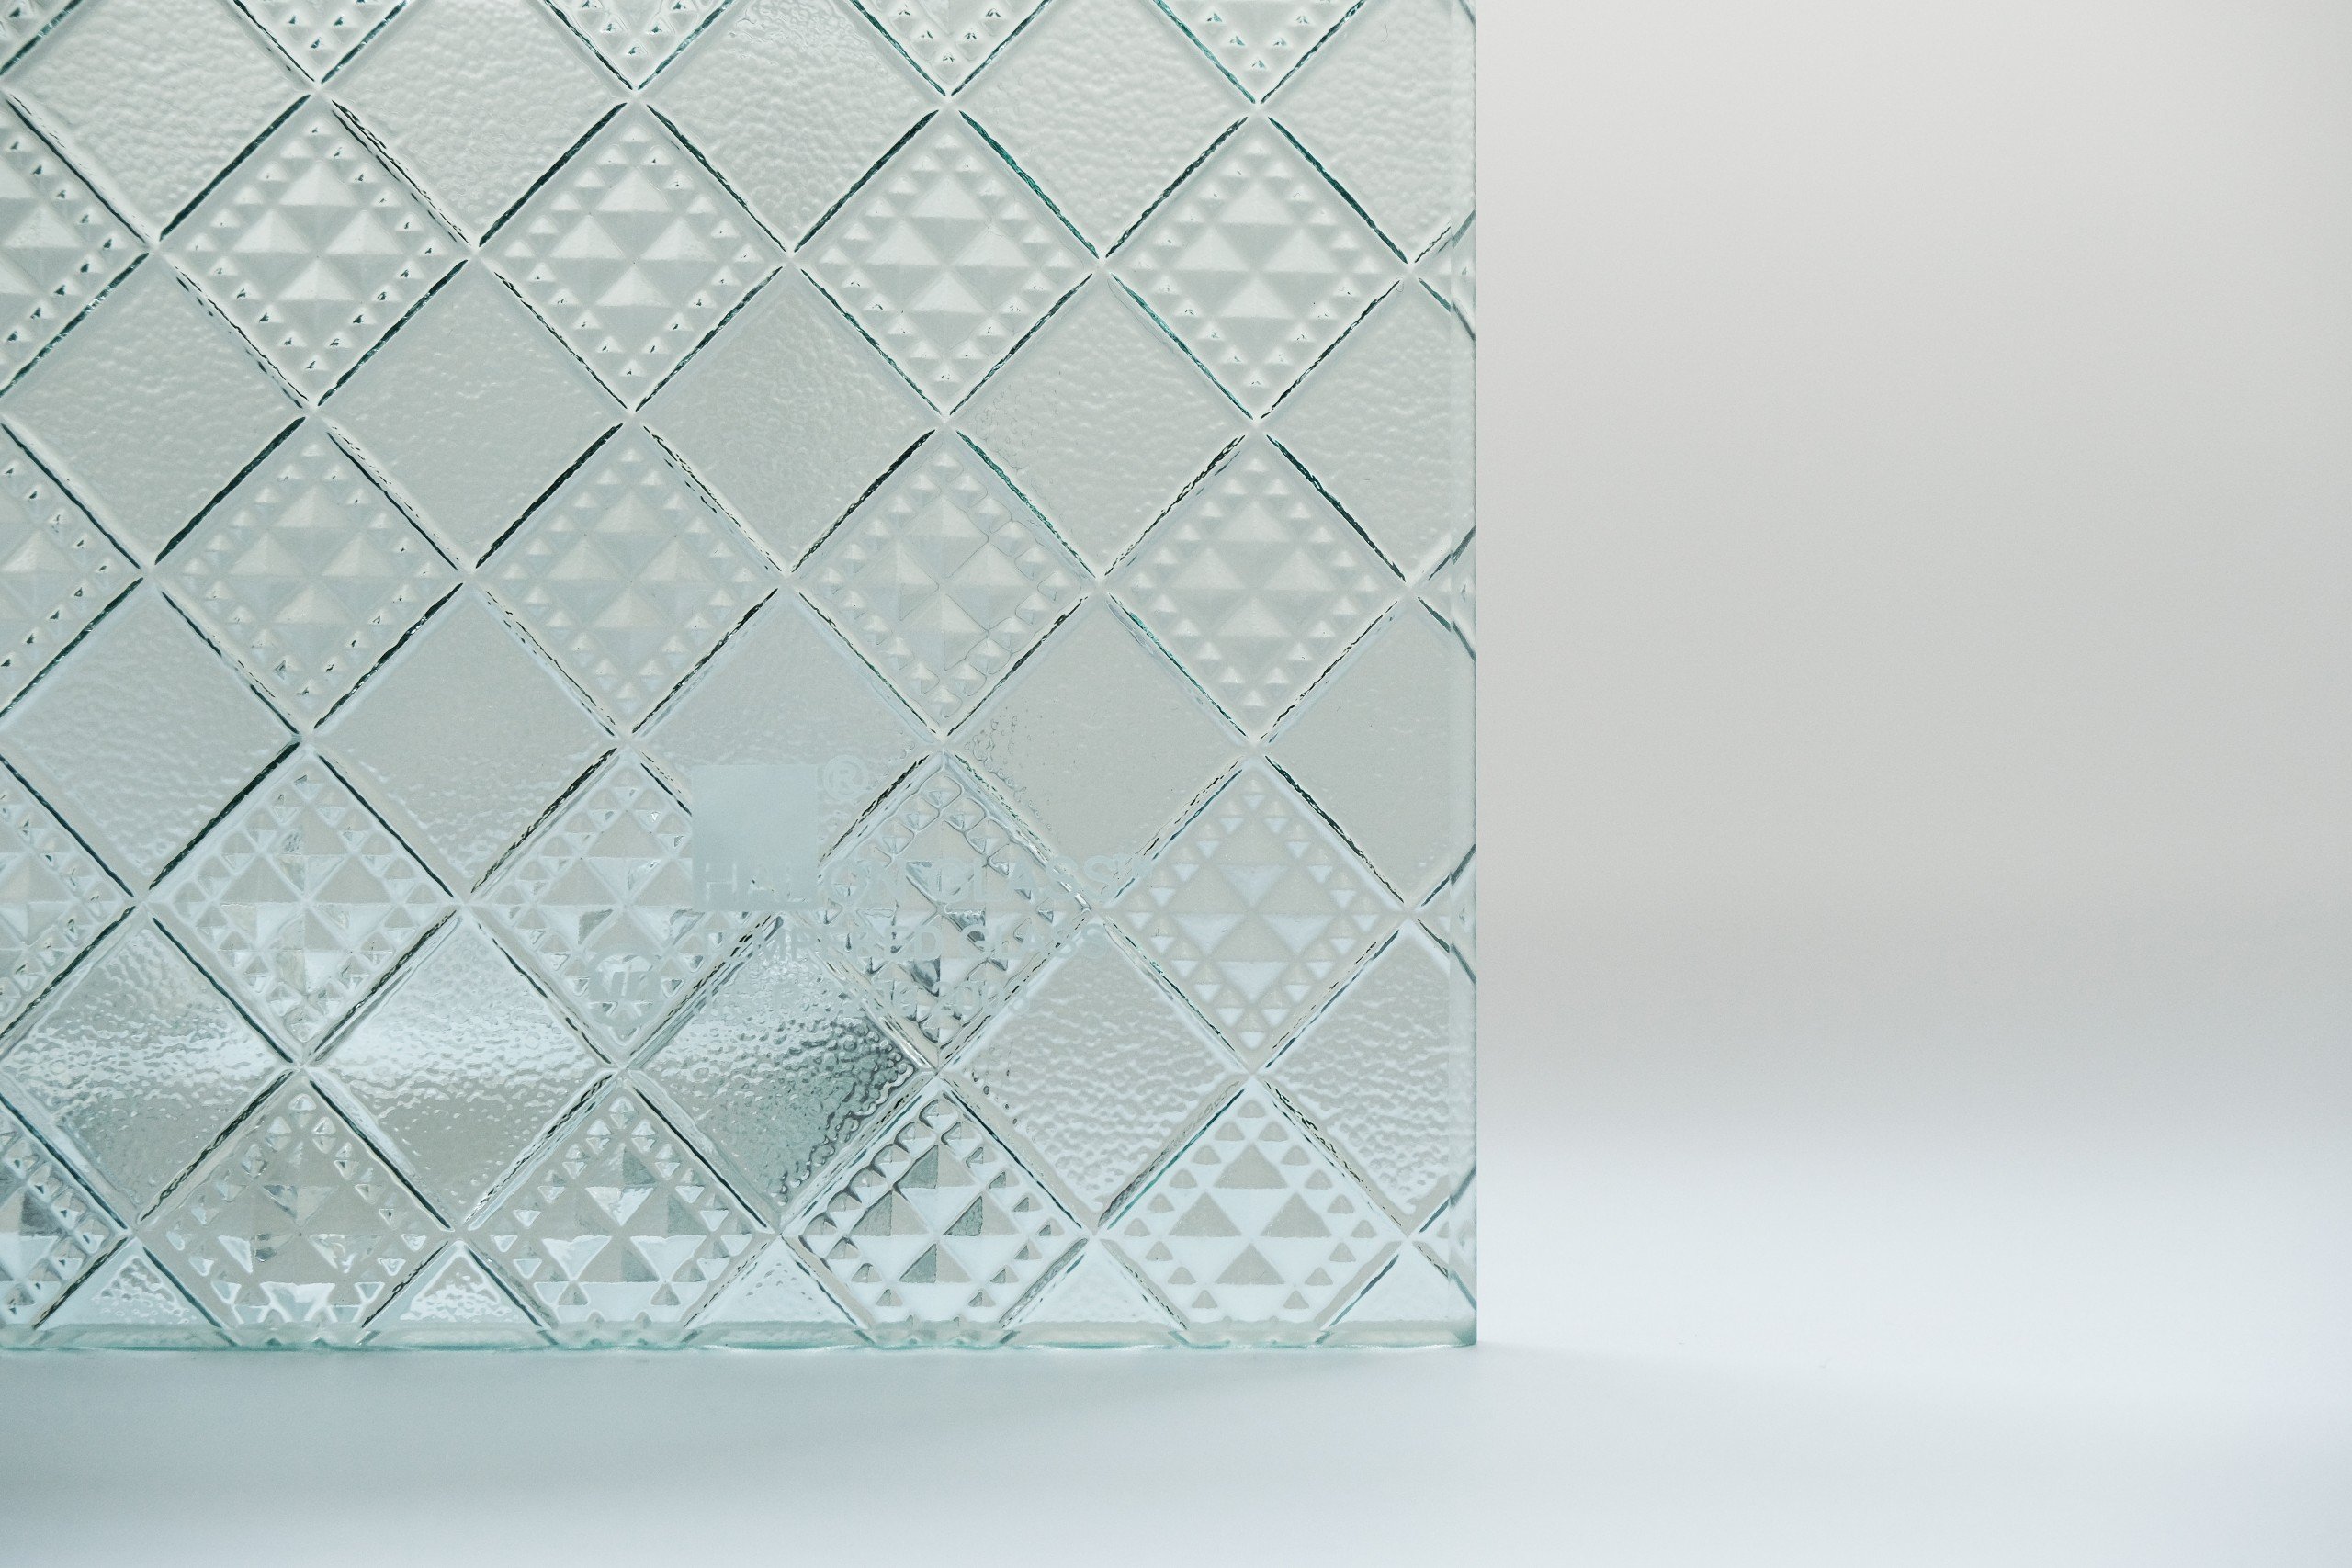 Patterned glass